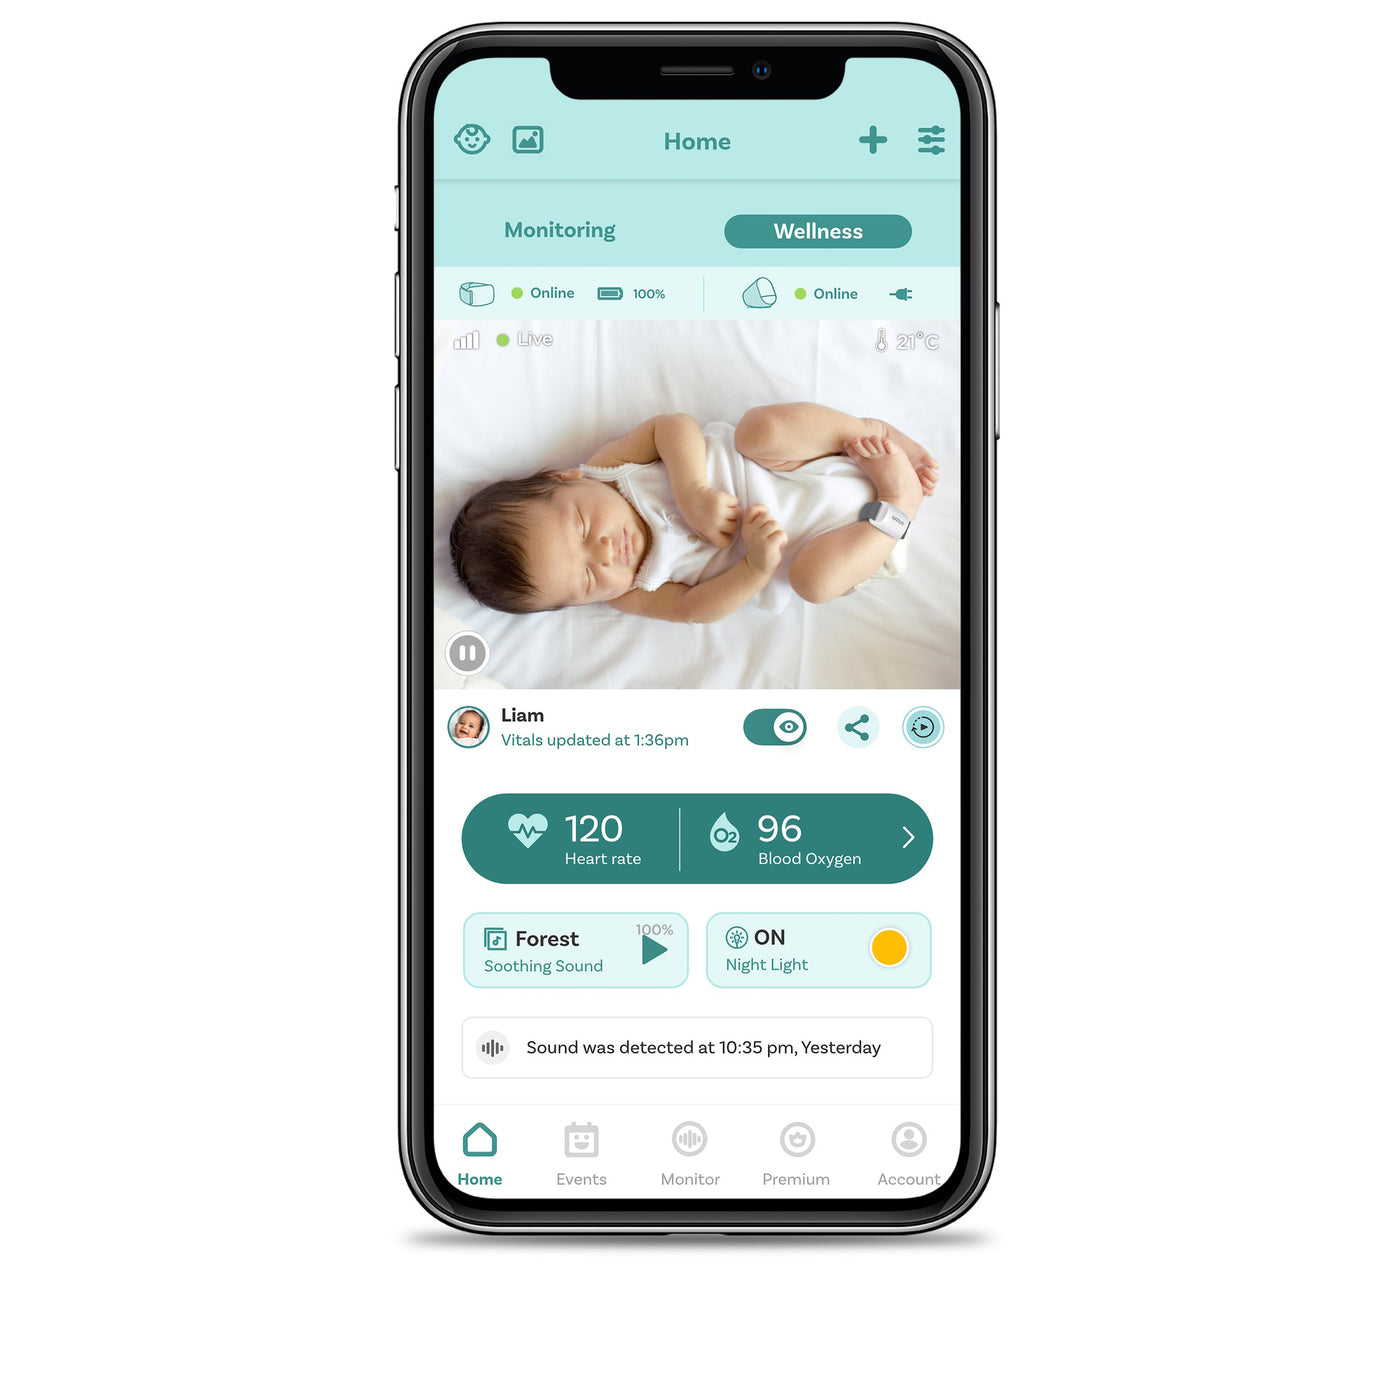 Guardian Pro Sleep Tracking + Video Baby Monitor